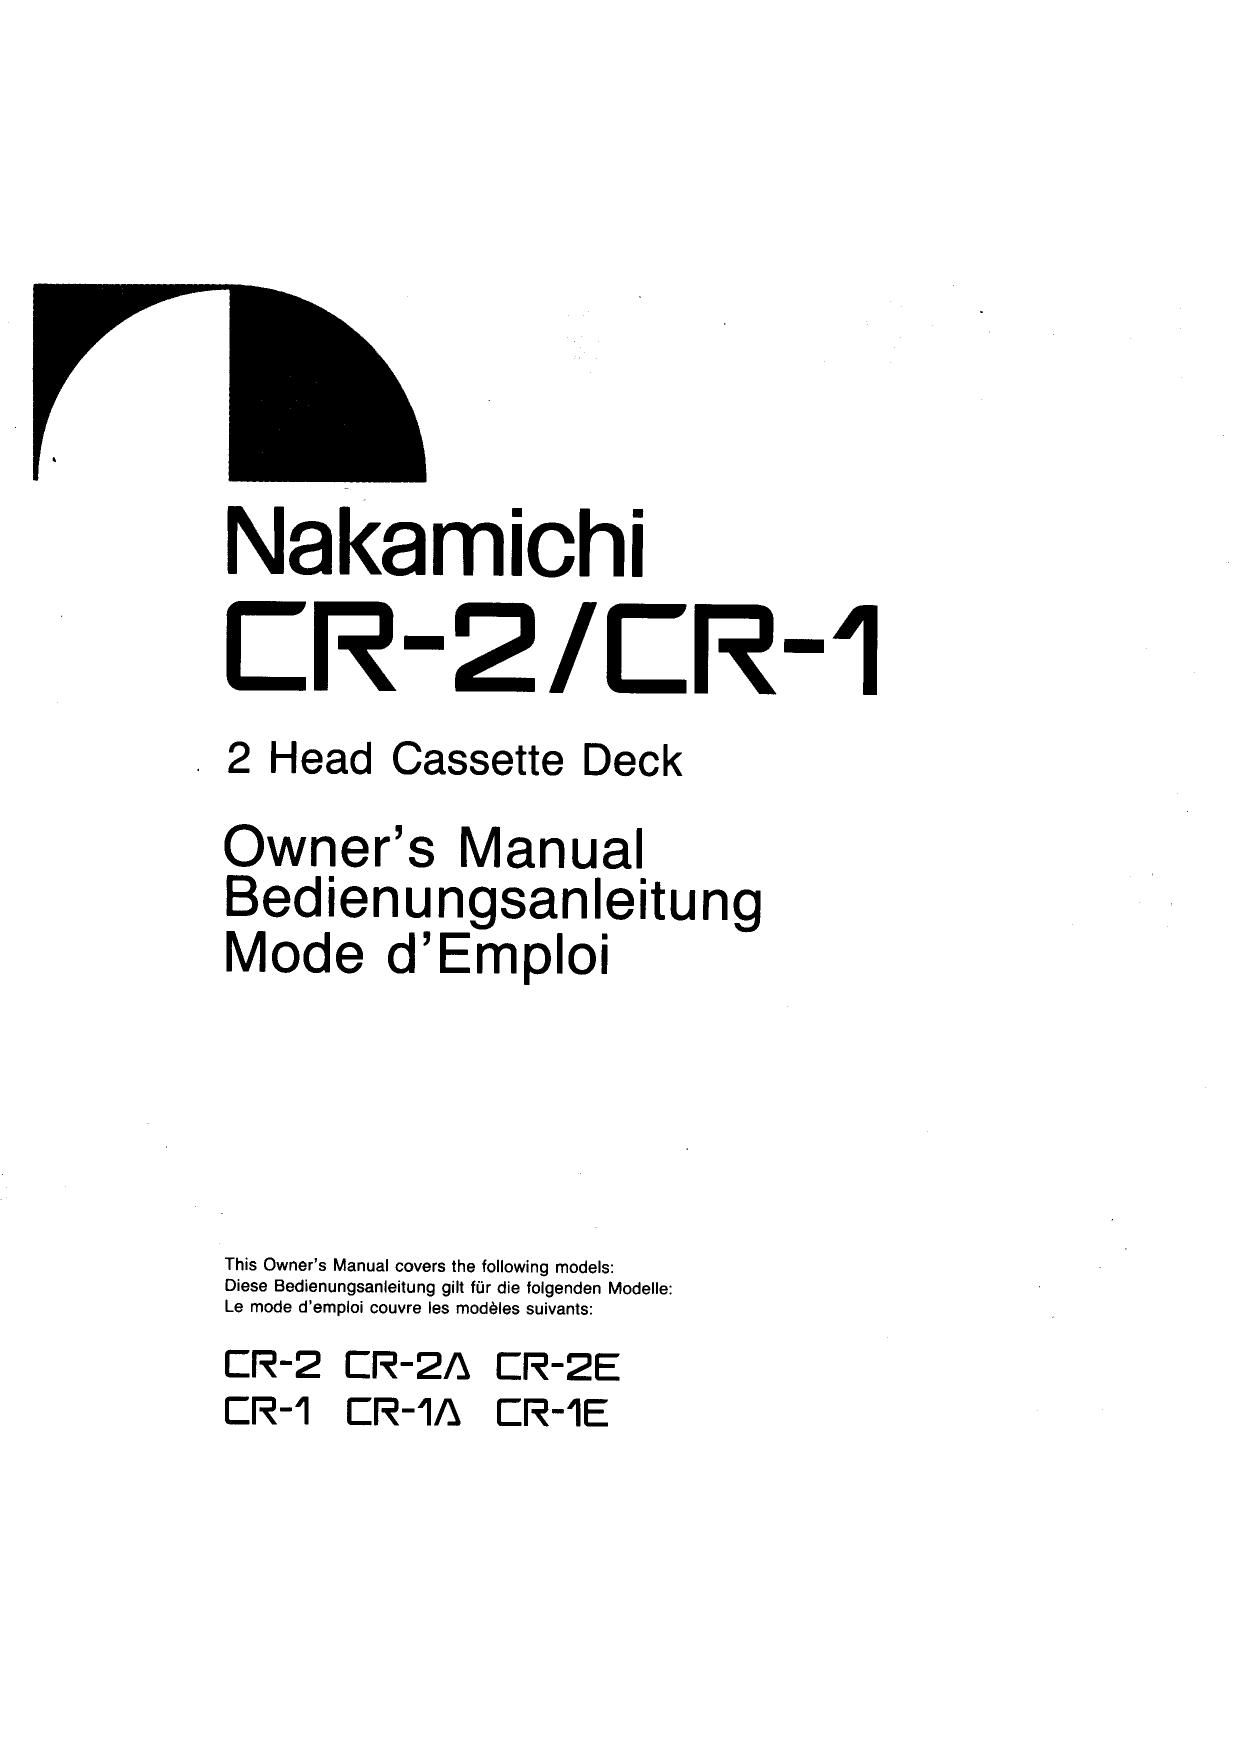 Nakamichi CR 2 Owners Manual